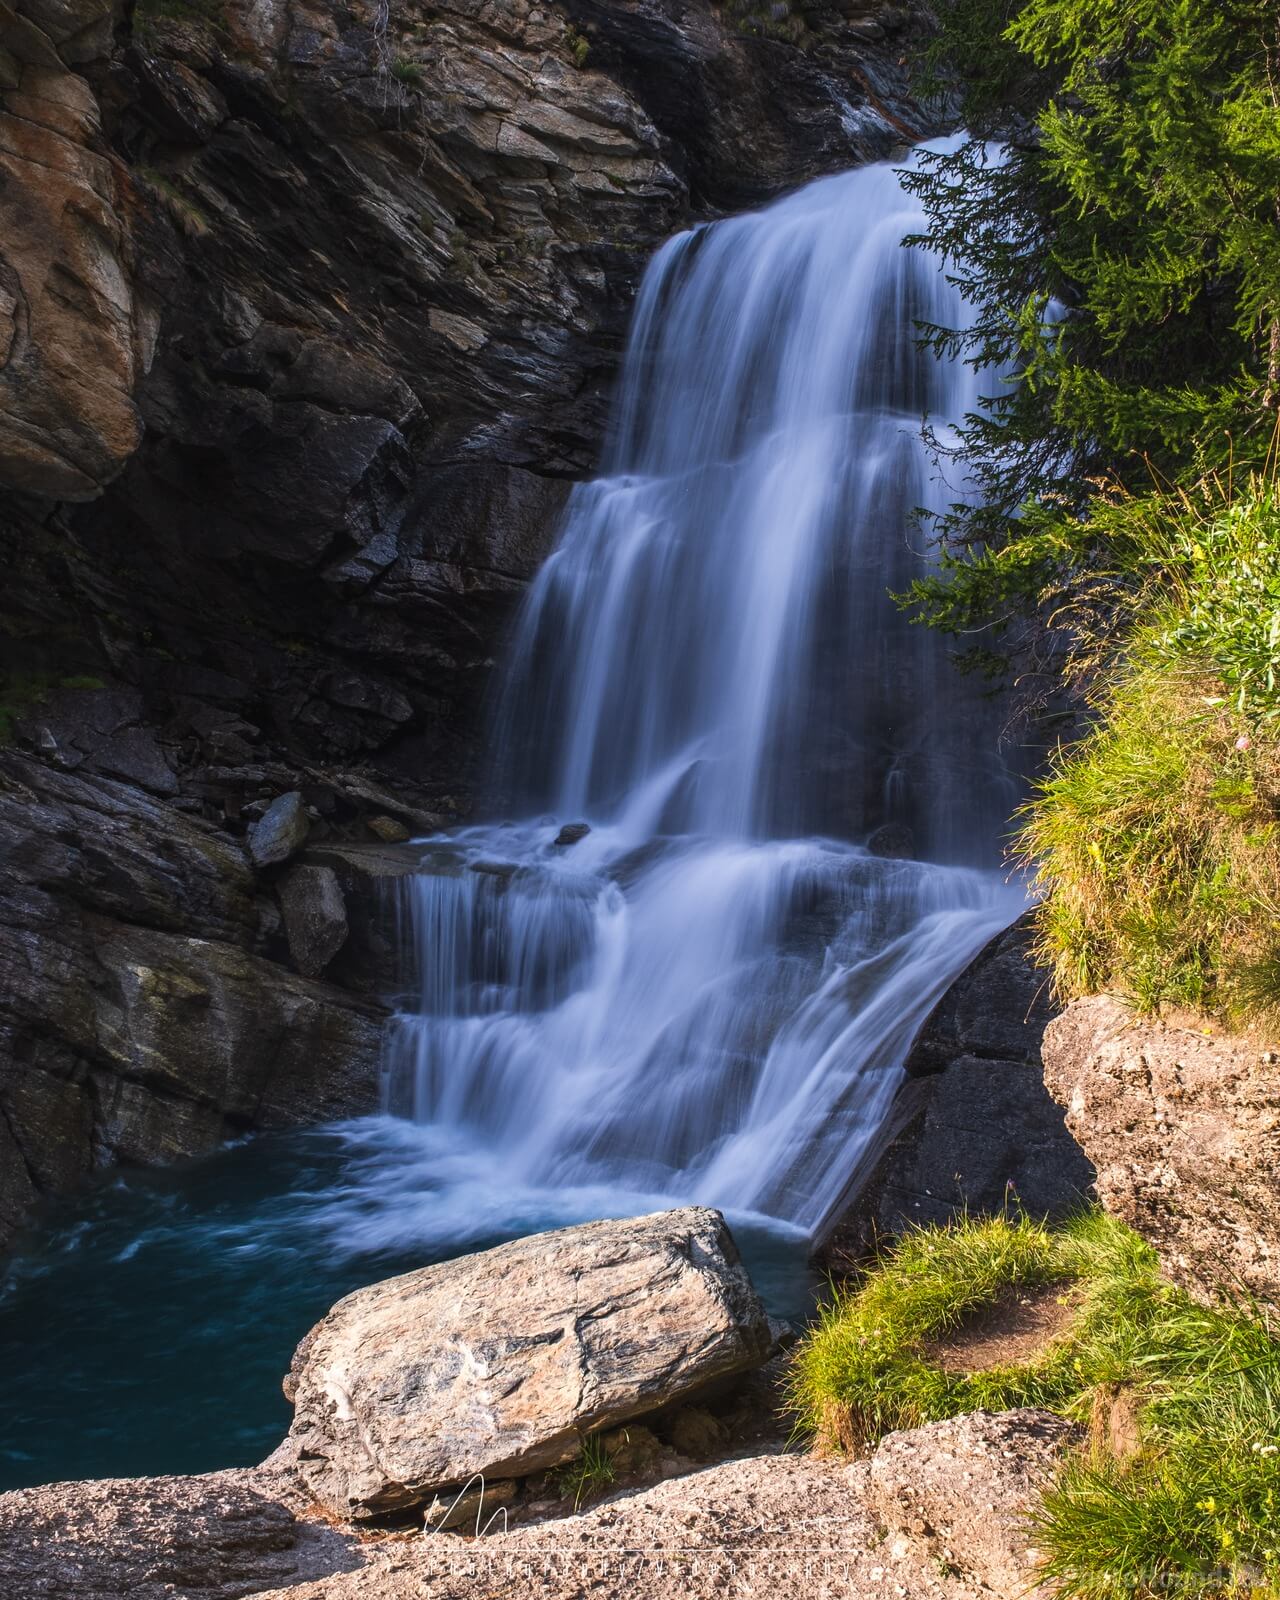 Image of Lillaz Waterfalls by Mattia Bedetti